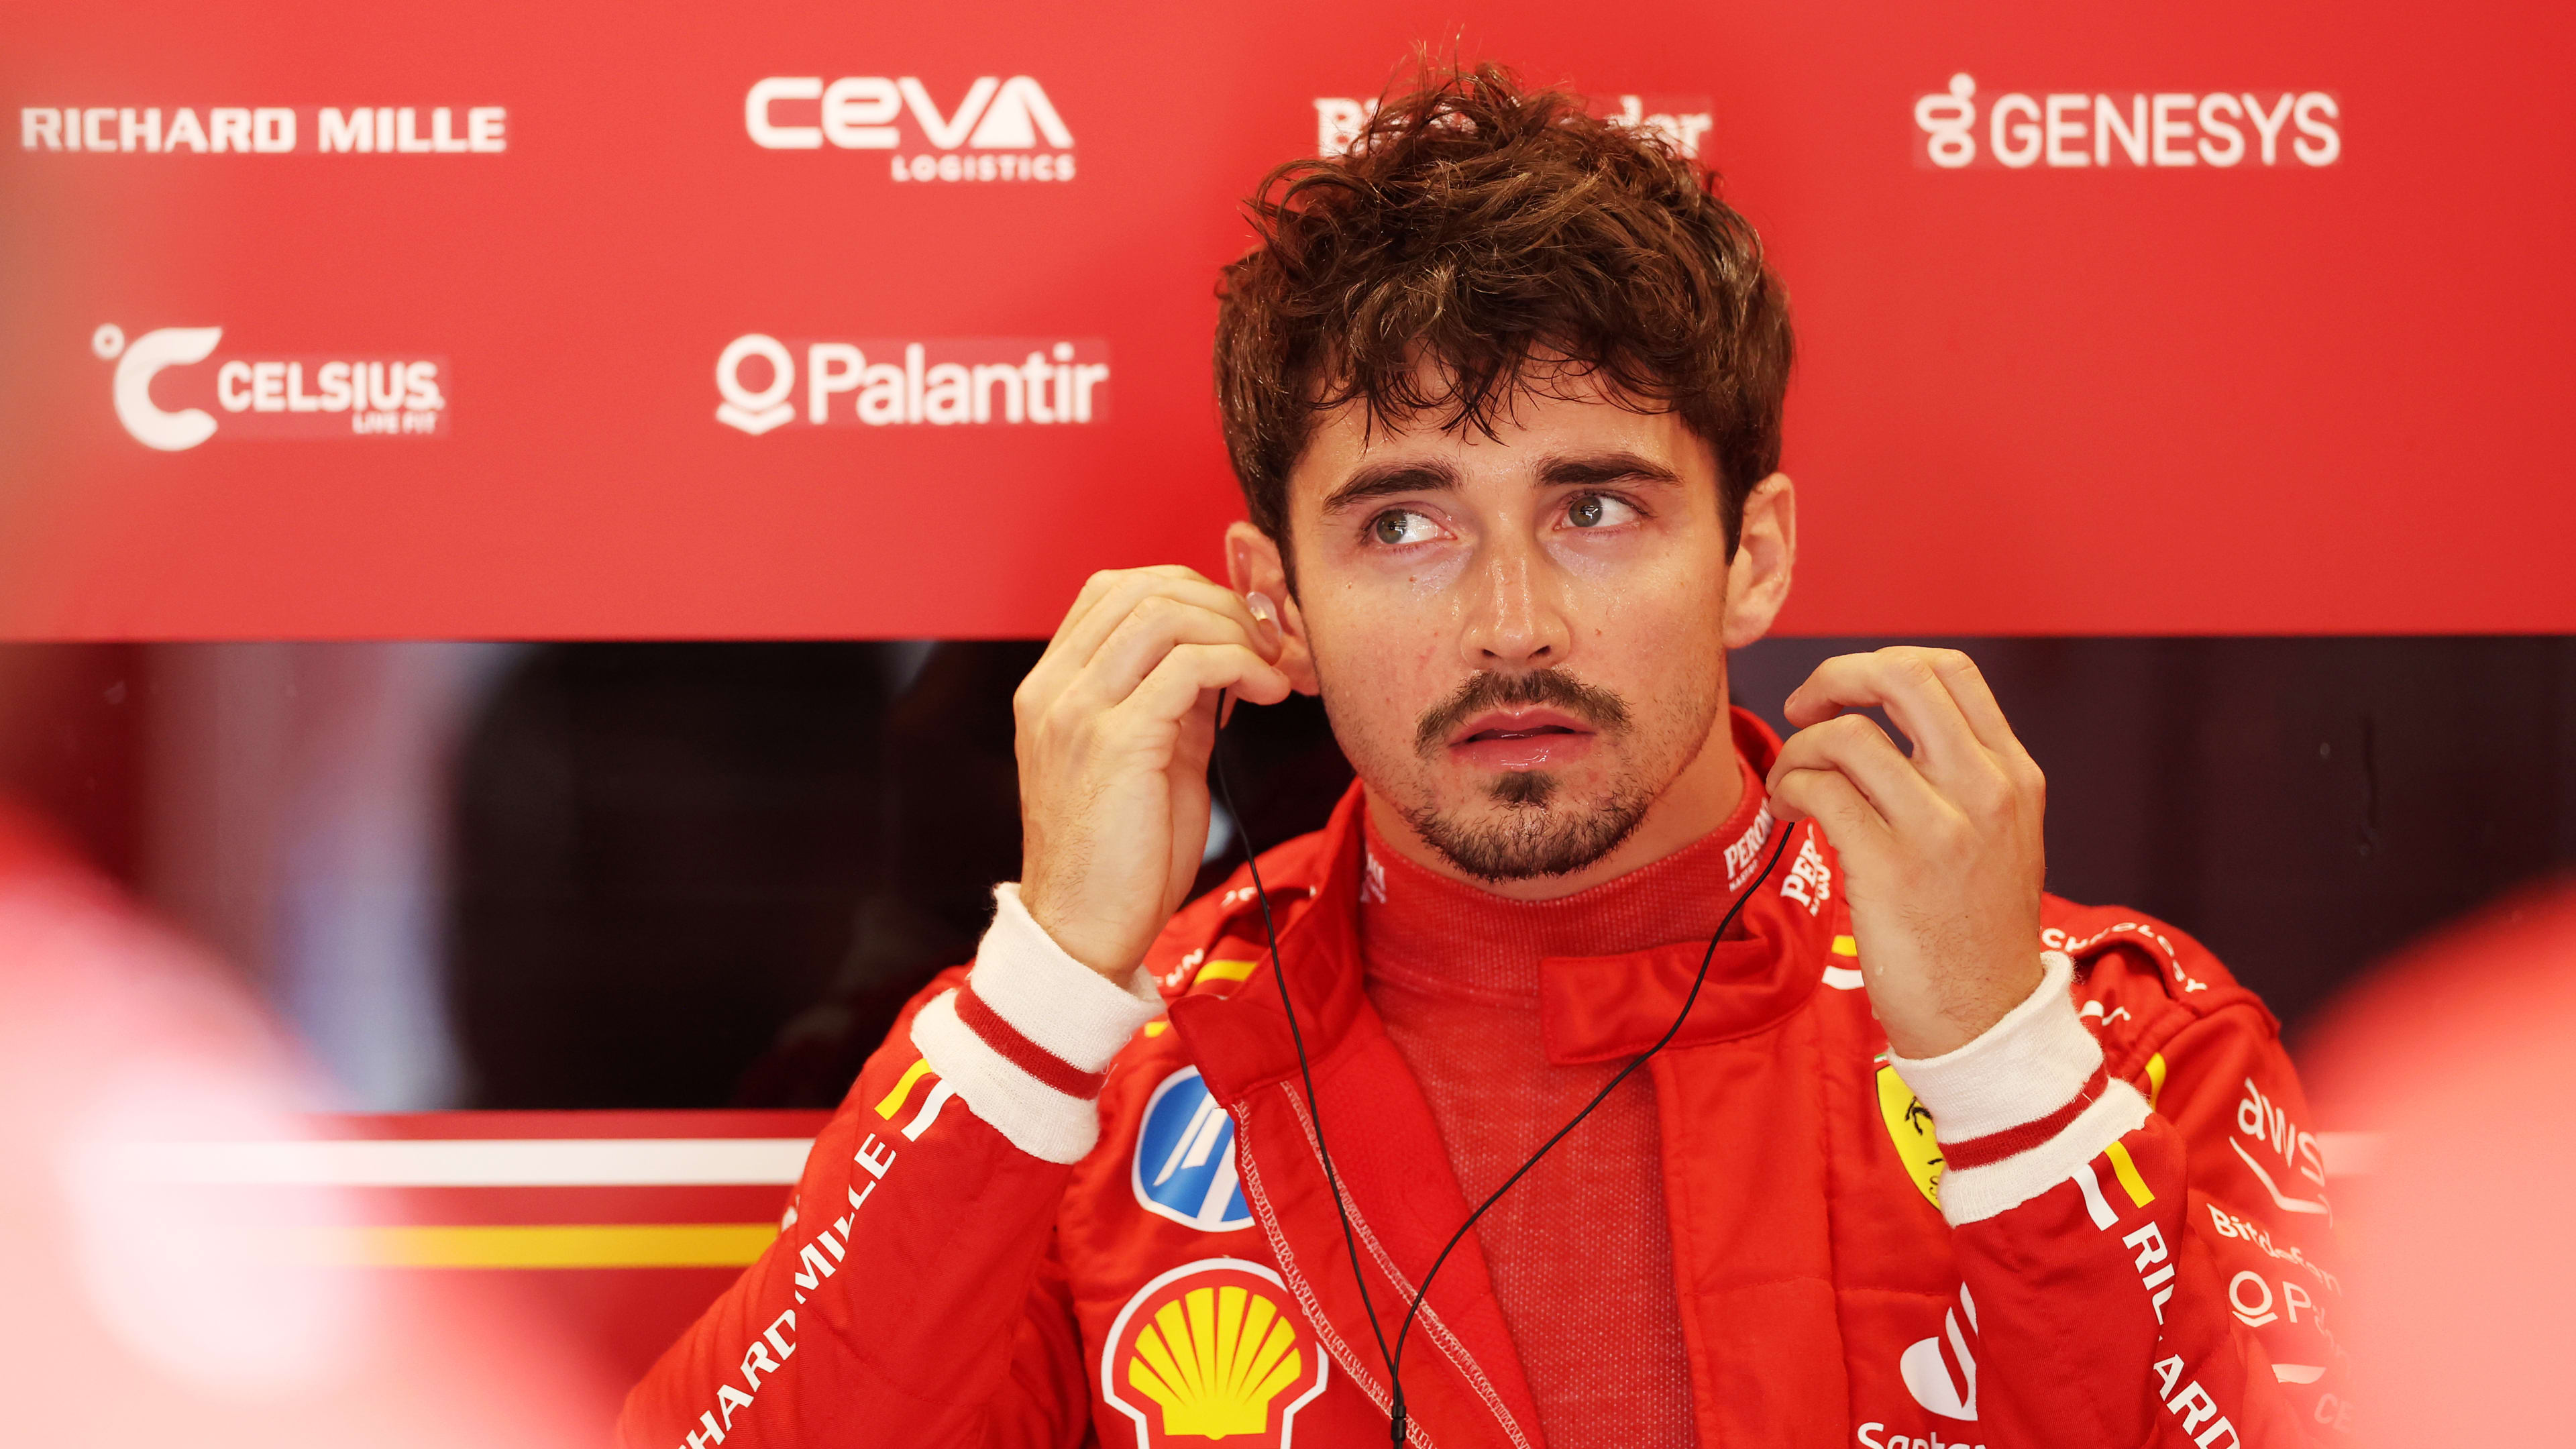 Leclerc praises performance of Ferrari upgrades as he prepares for ‘super important’ qualifying in Imola